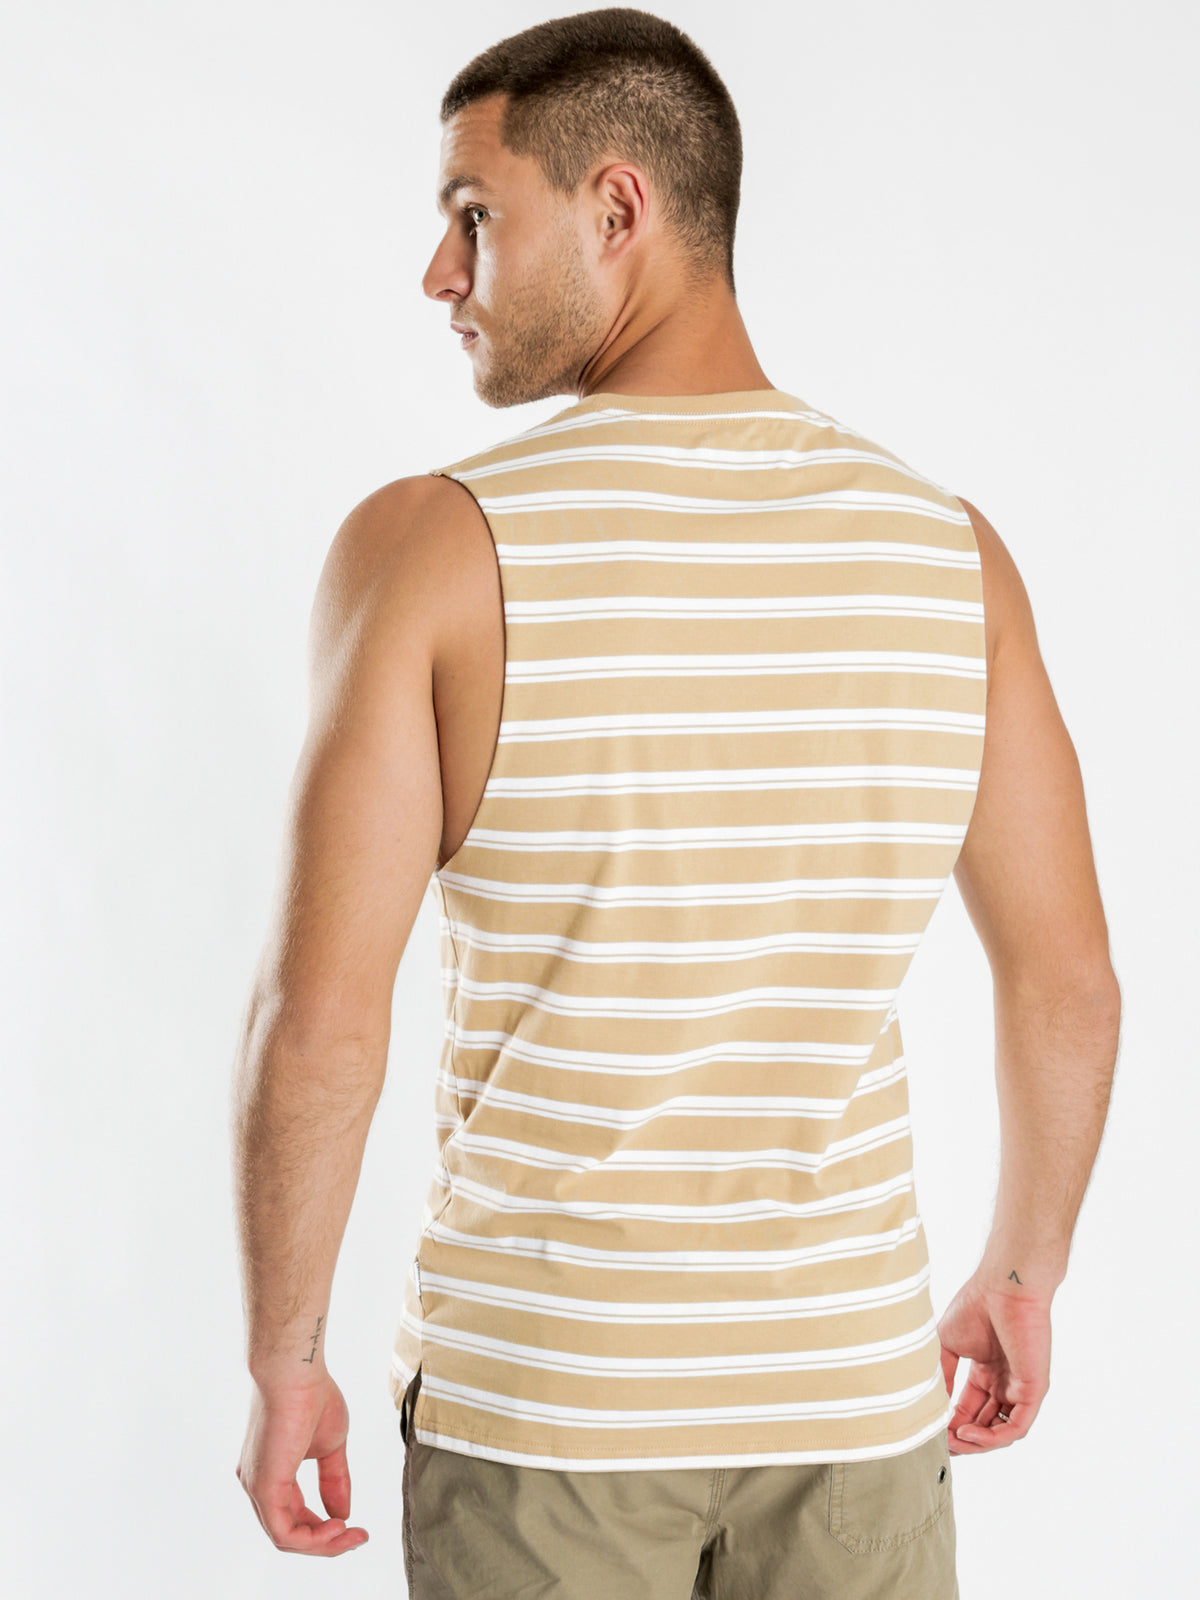 Cayo Stripe Muscle T-Shirt in Butter